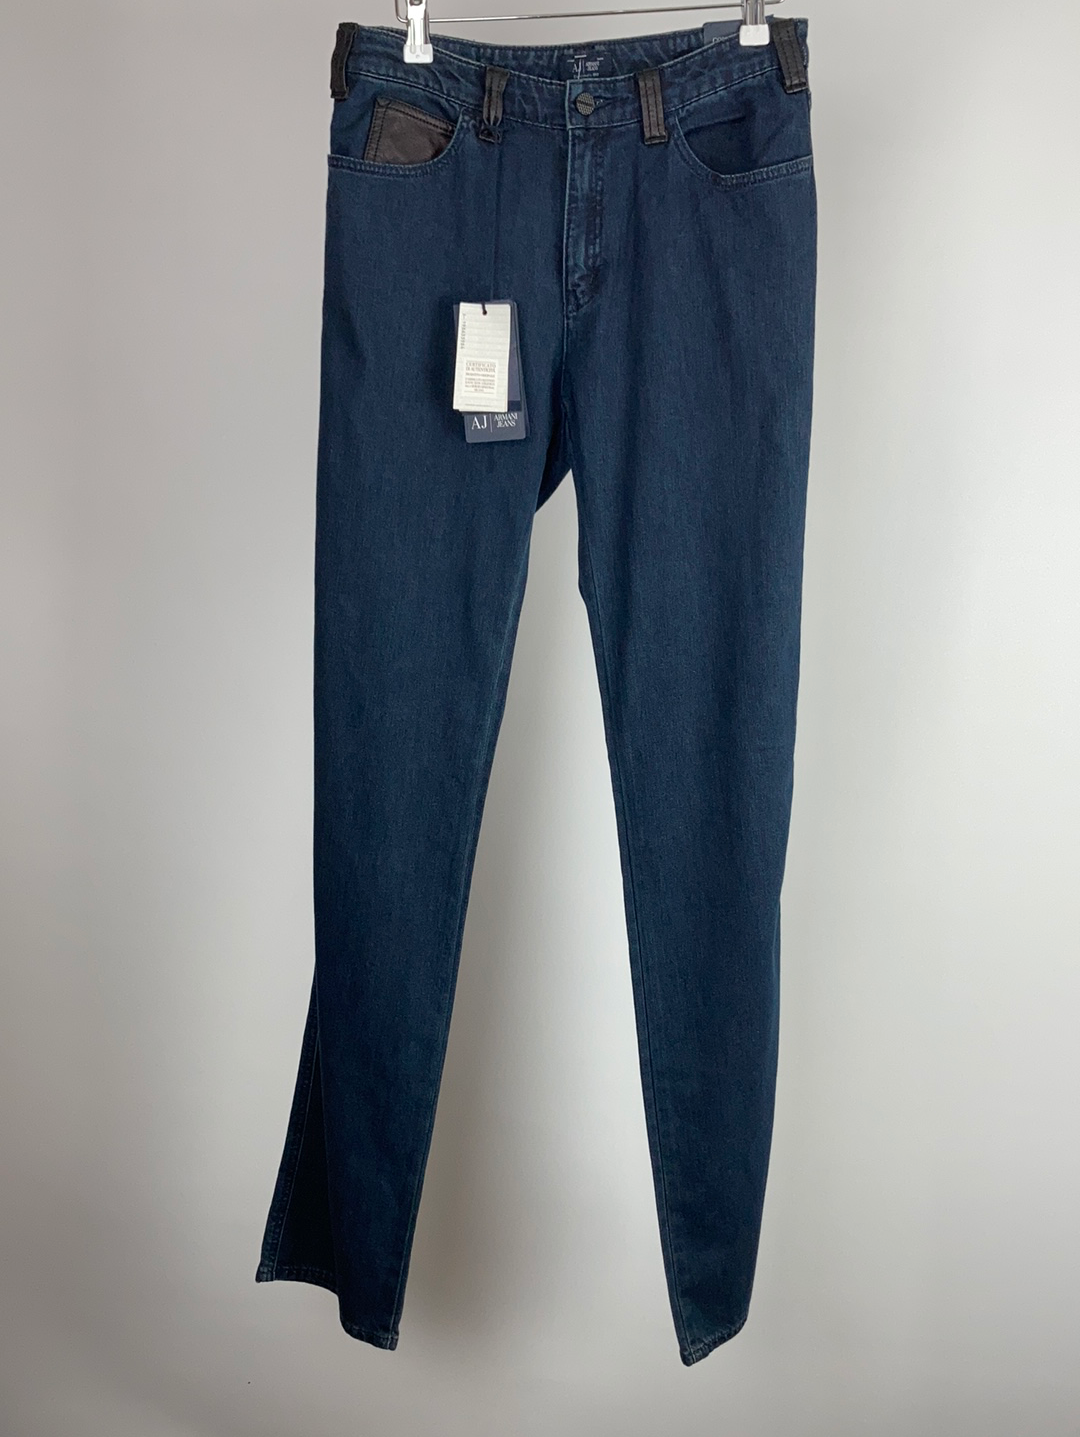 Armani regular fit j75 jeans size 30